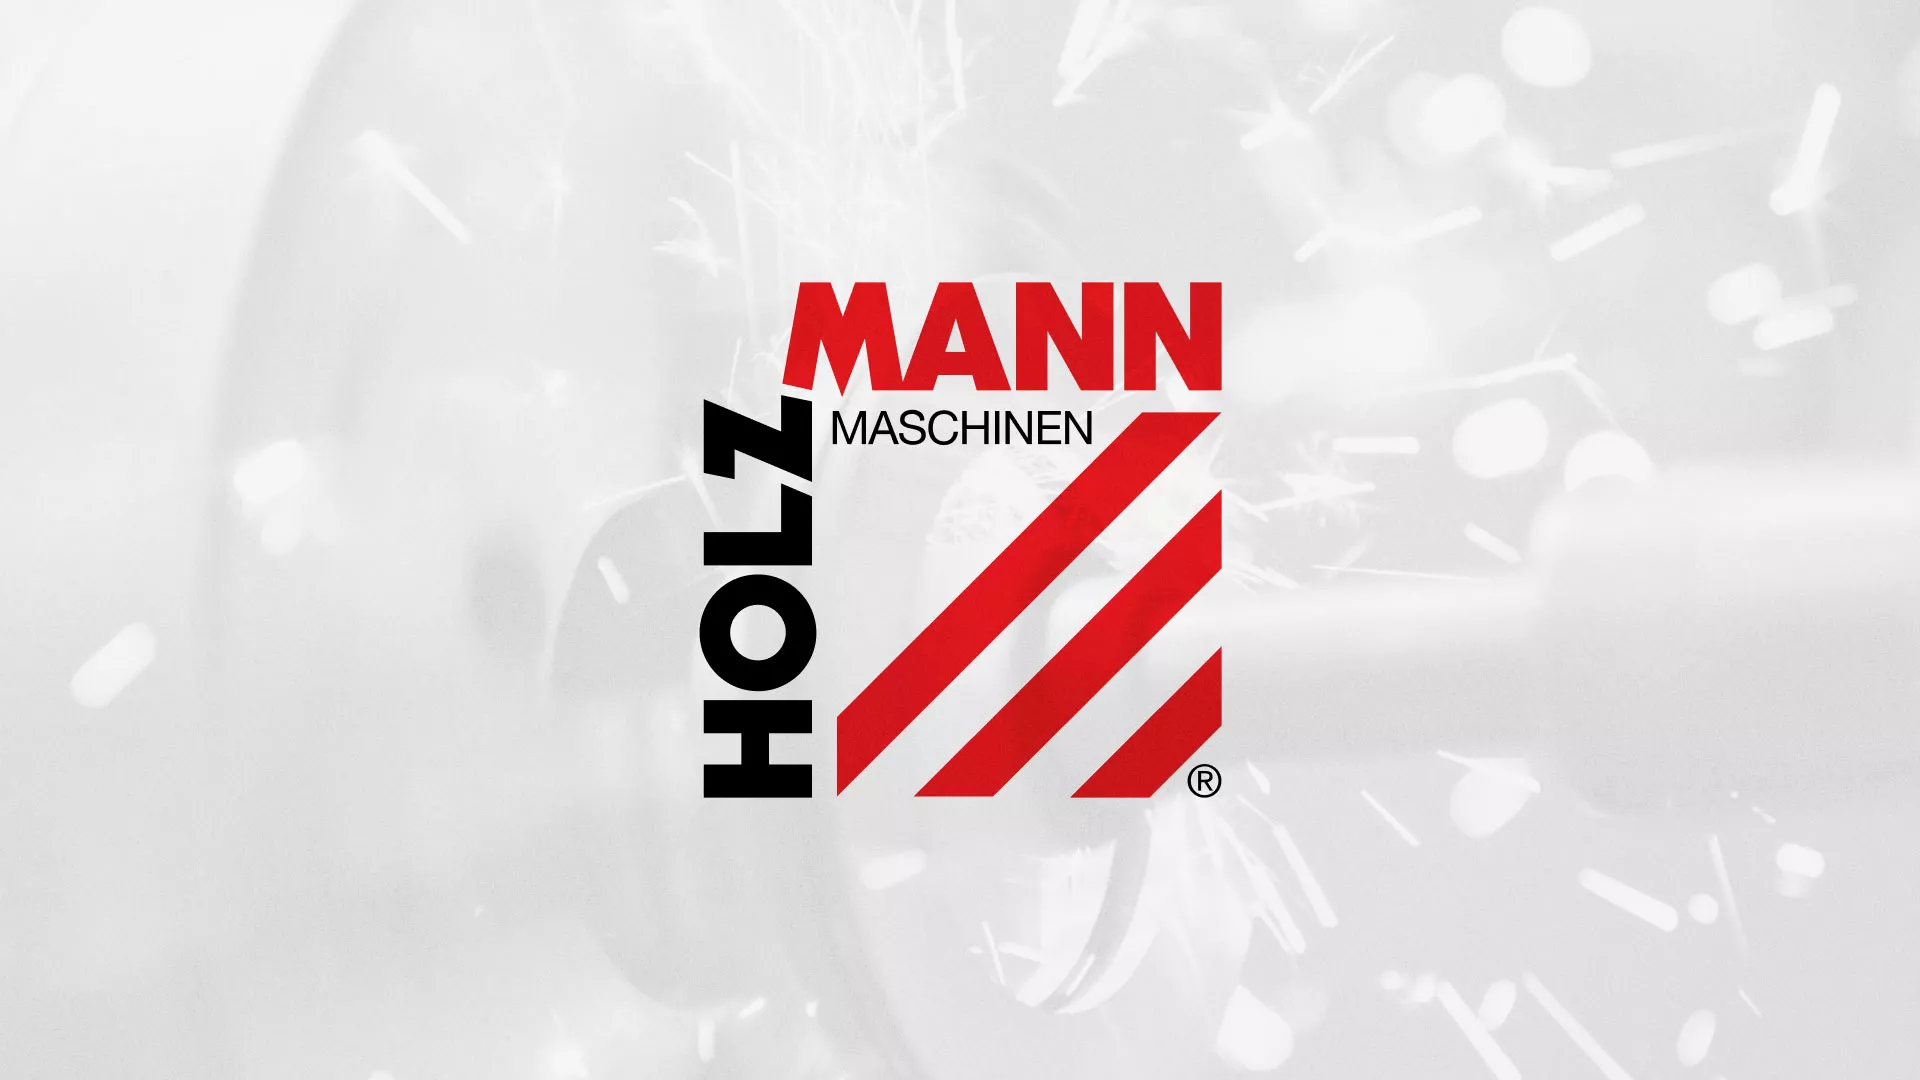 Создание сайта компании «HOLZMANN Maschinen GmbH» в Симе